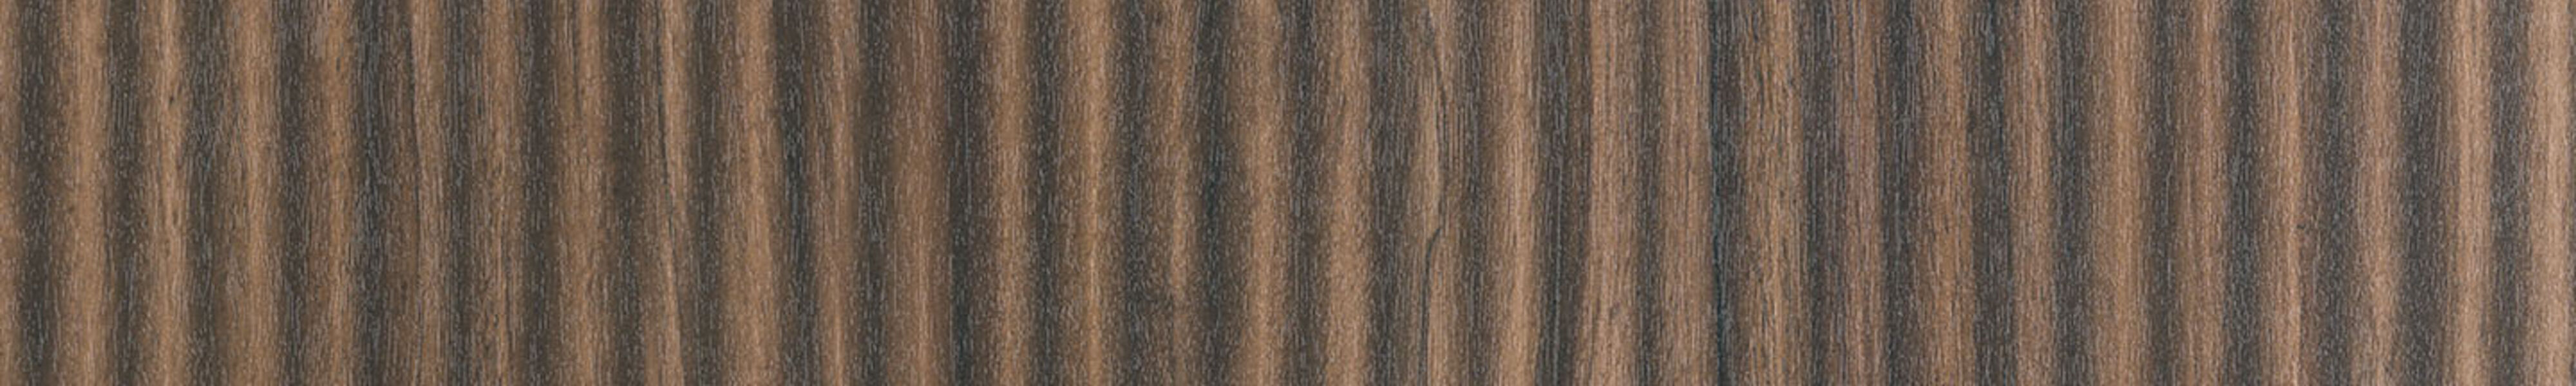 skai<sup>®</sup> structure Milano dark brown       L 0,43 1440